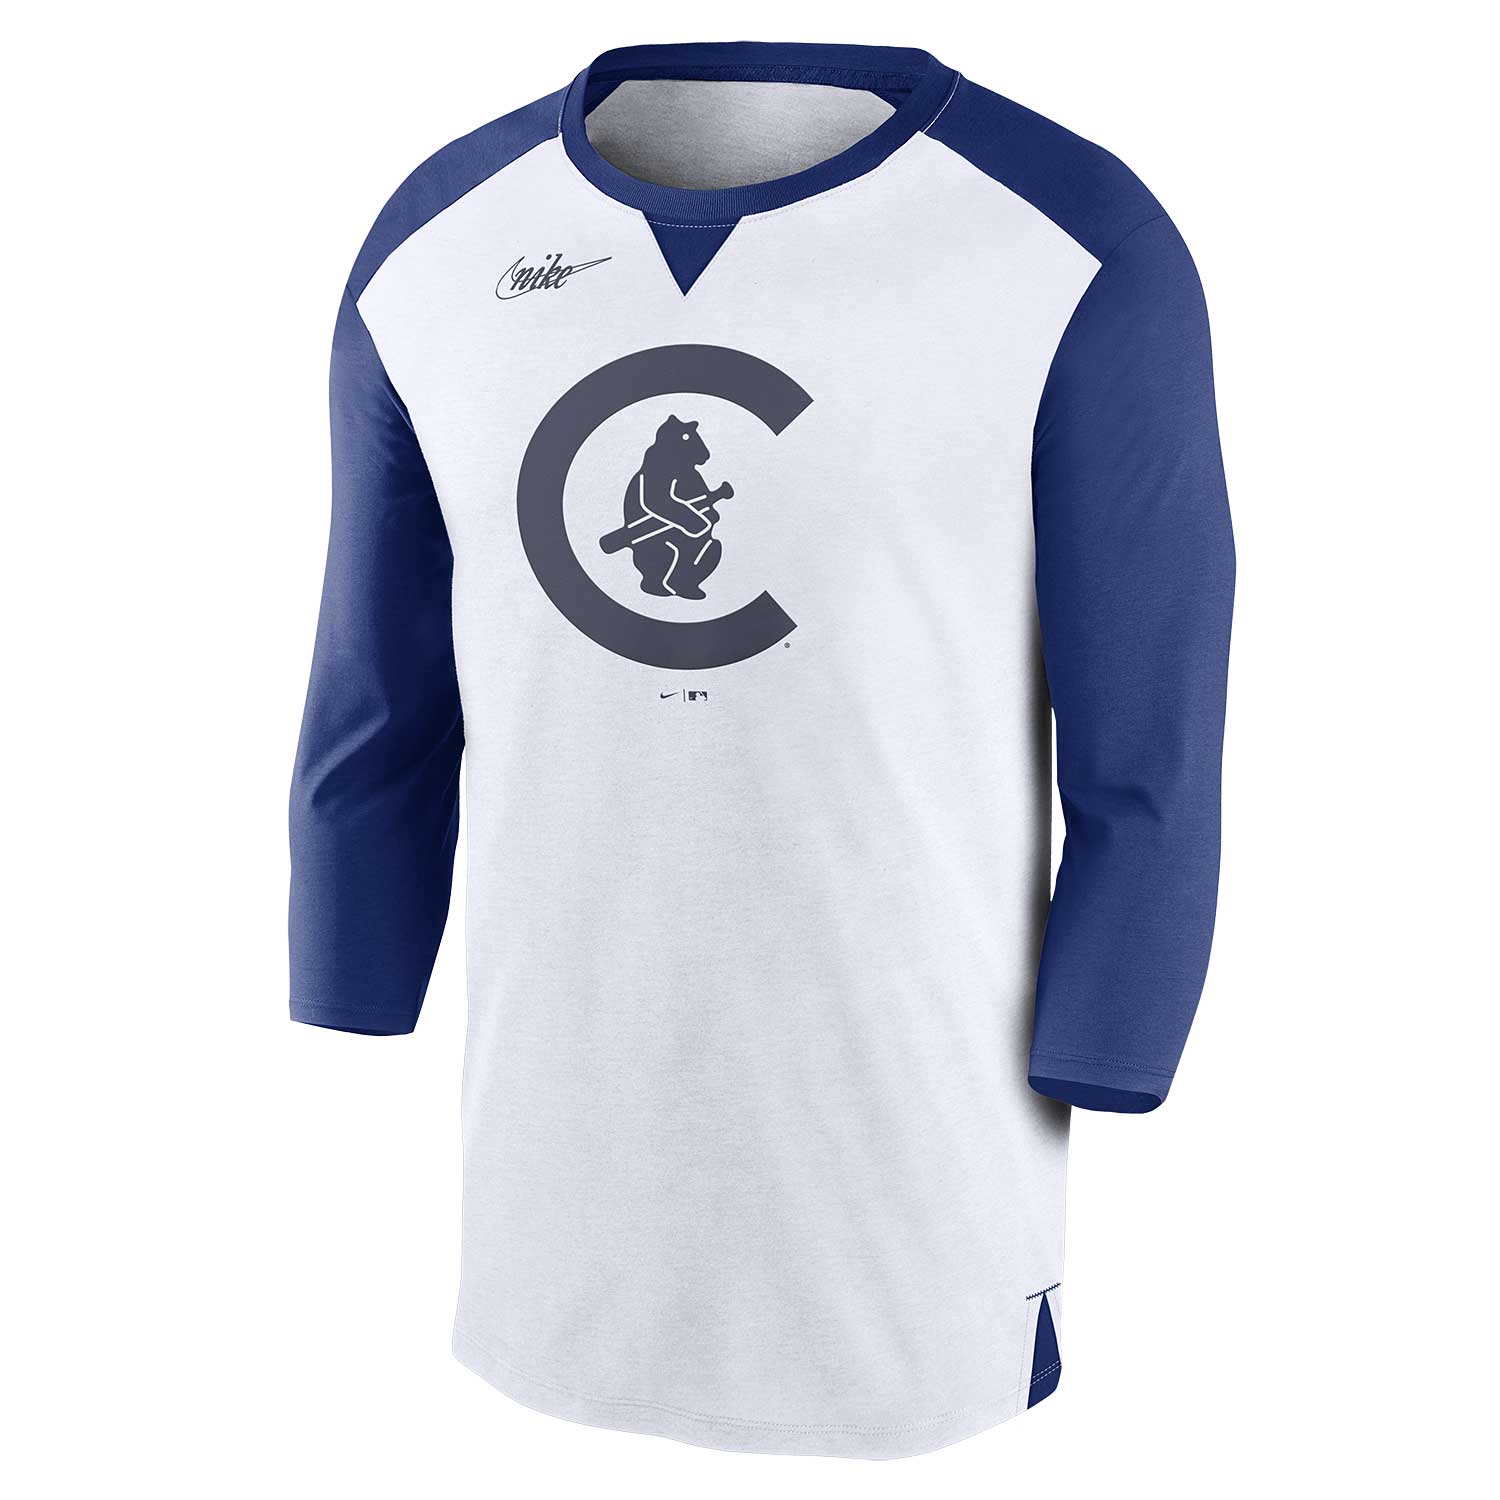 Nike Chicago Cubs 1911 Rewind Raglan 3/4-Sleeve T-Shirt Large